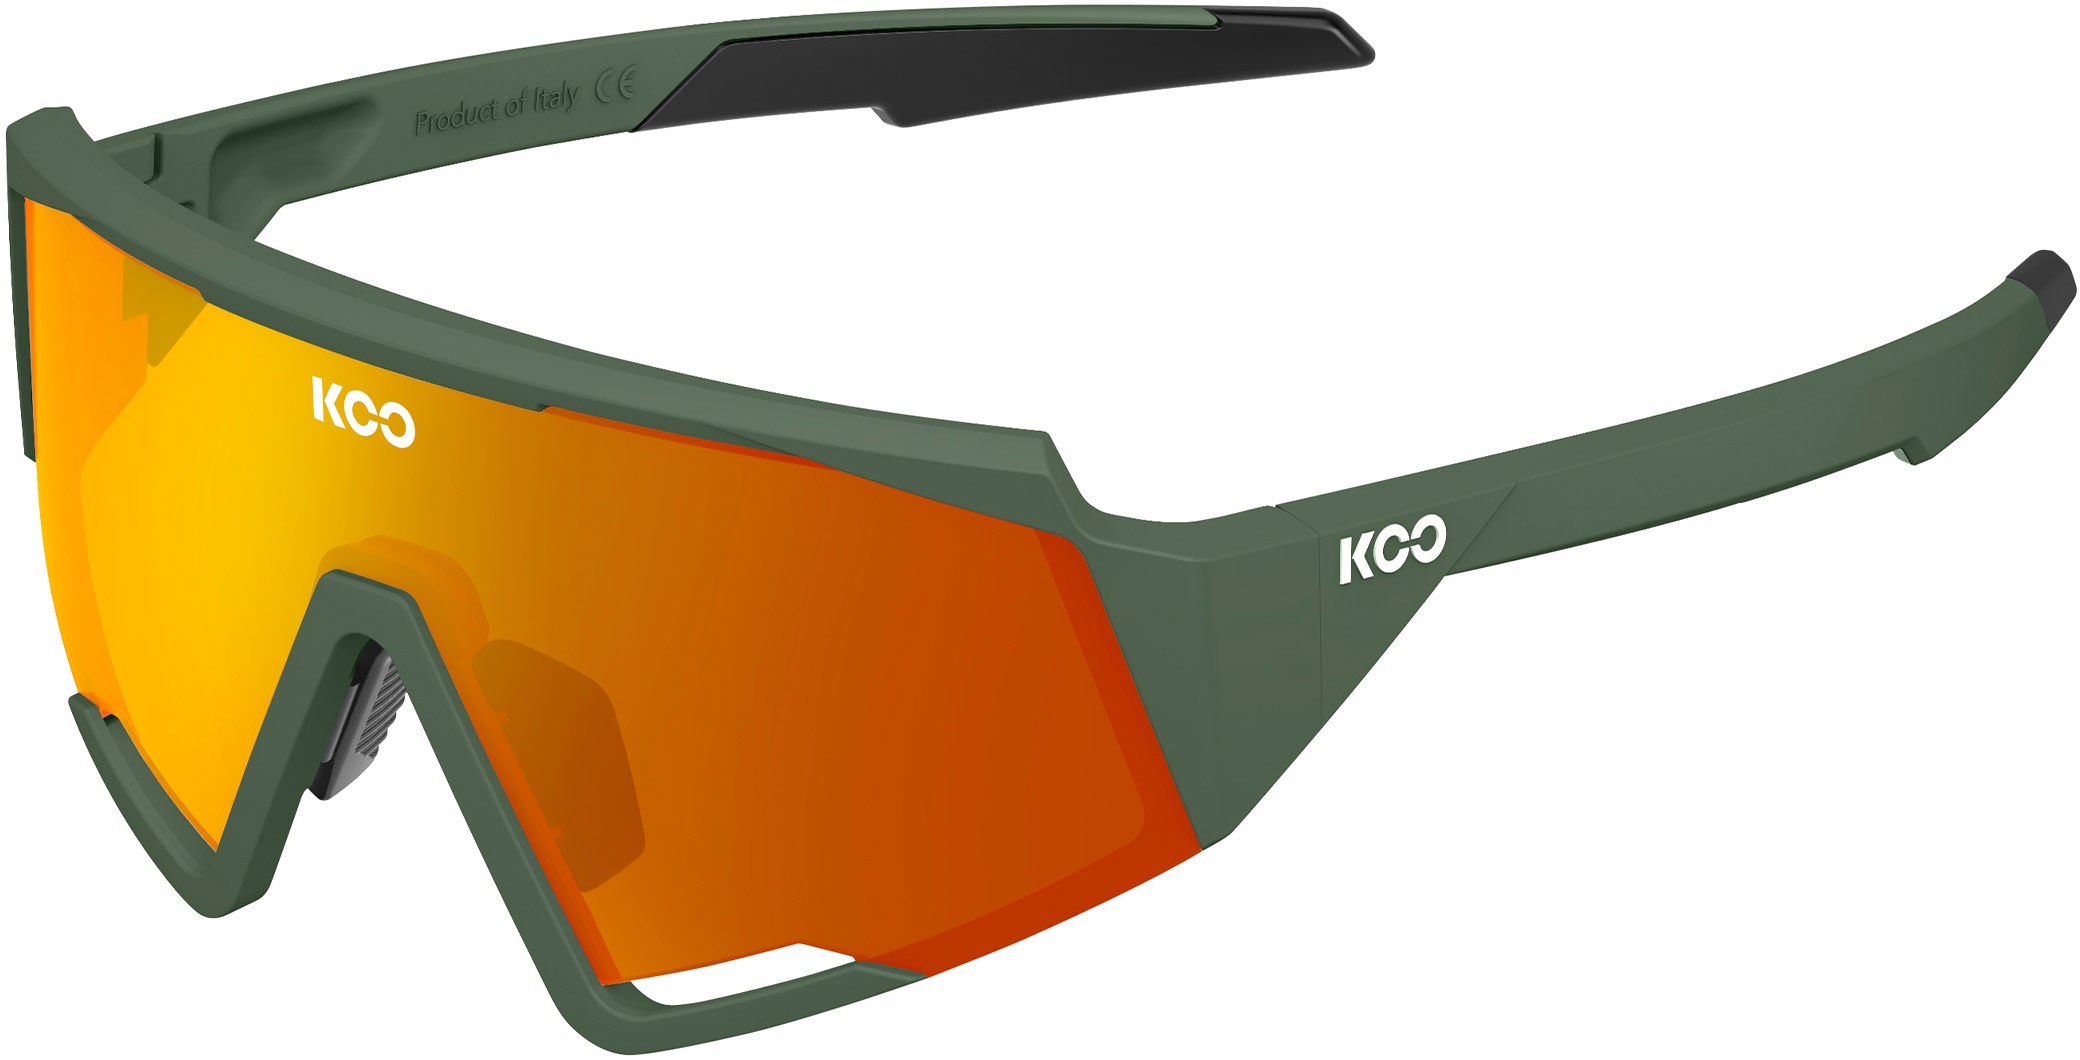  - KOO Spectro Cykelbriller - Grøn/Orange